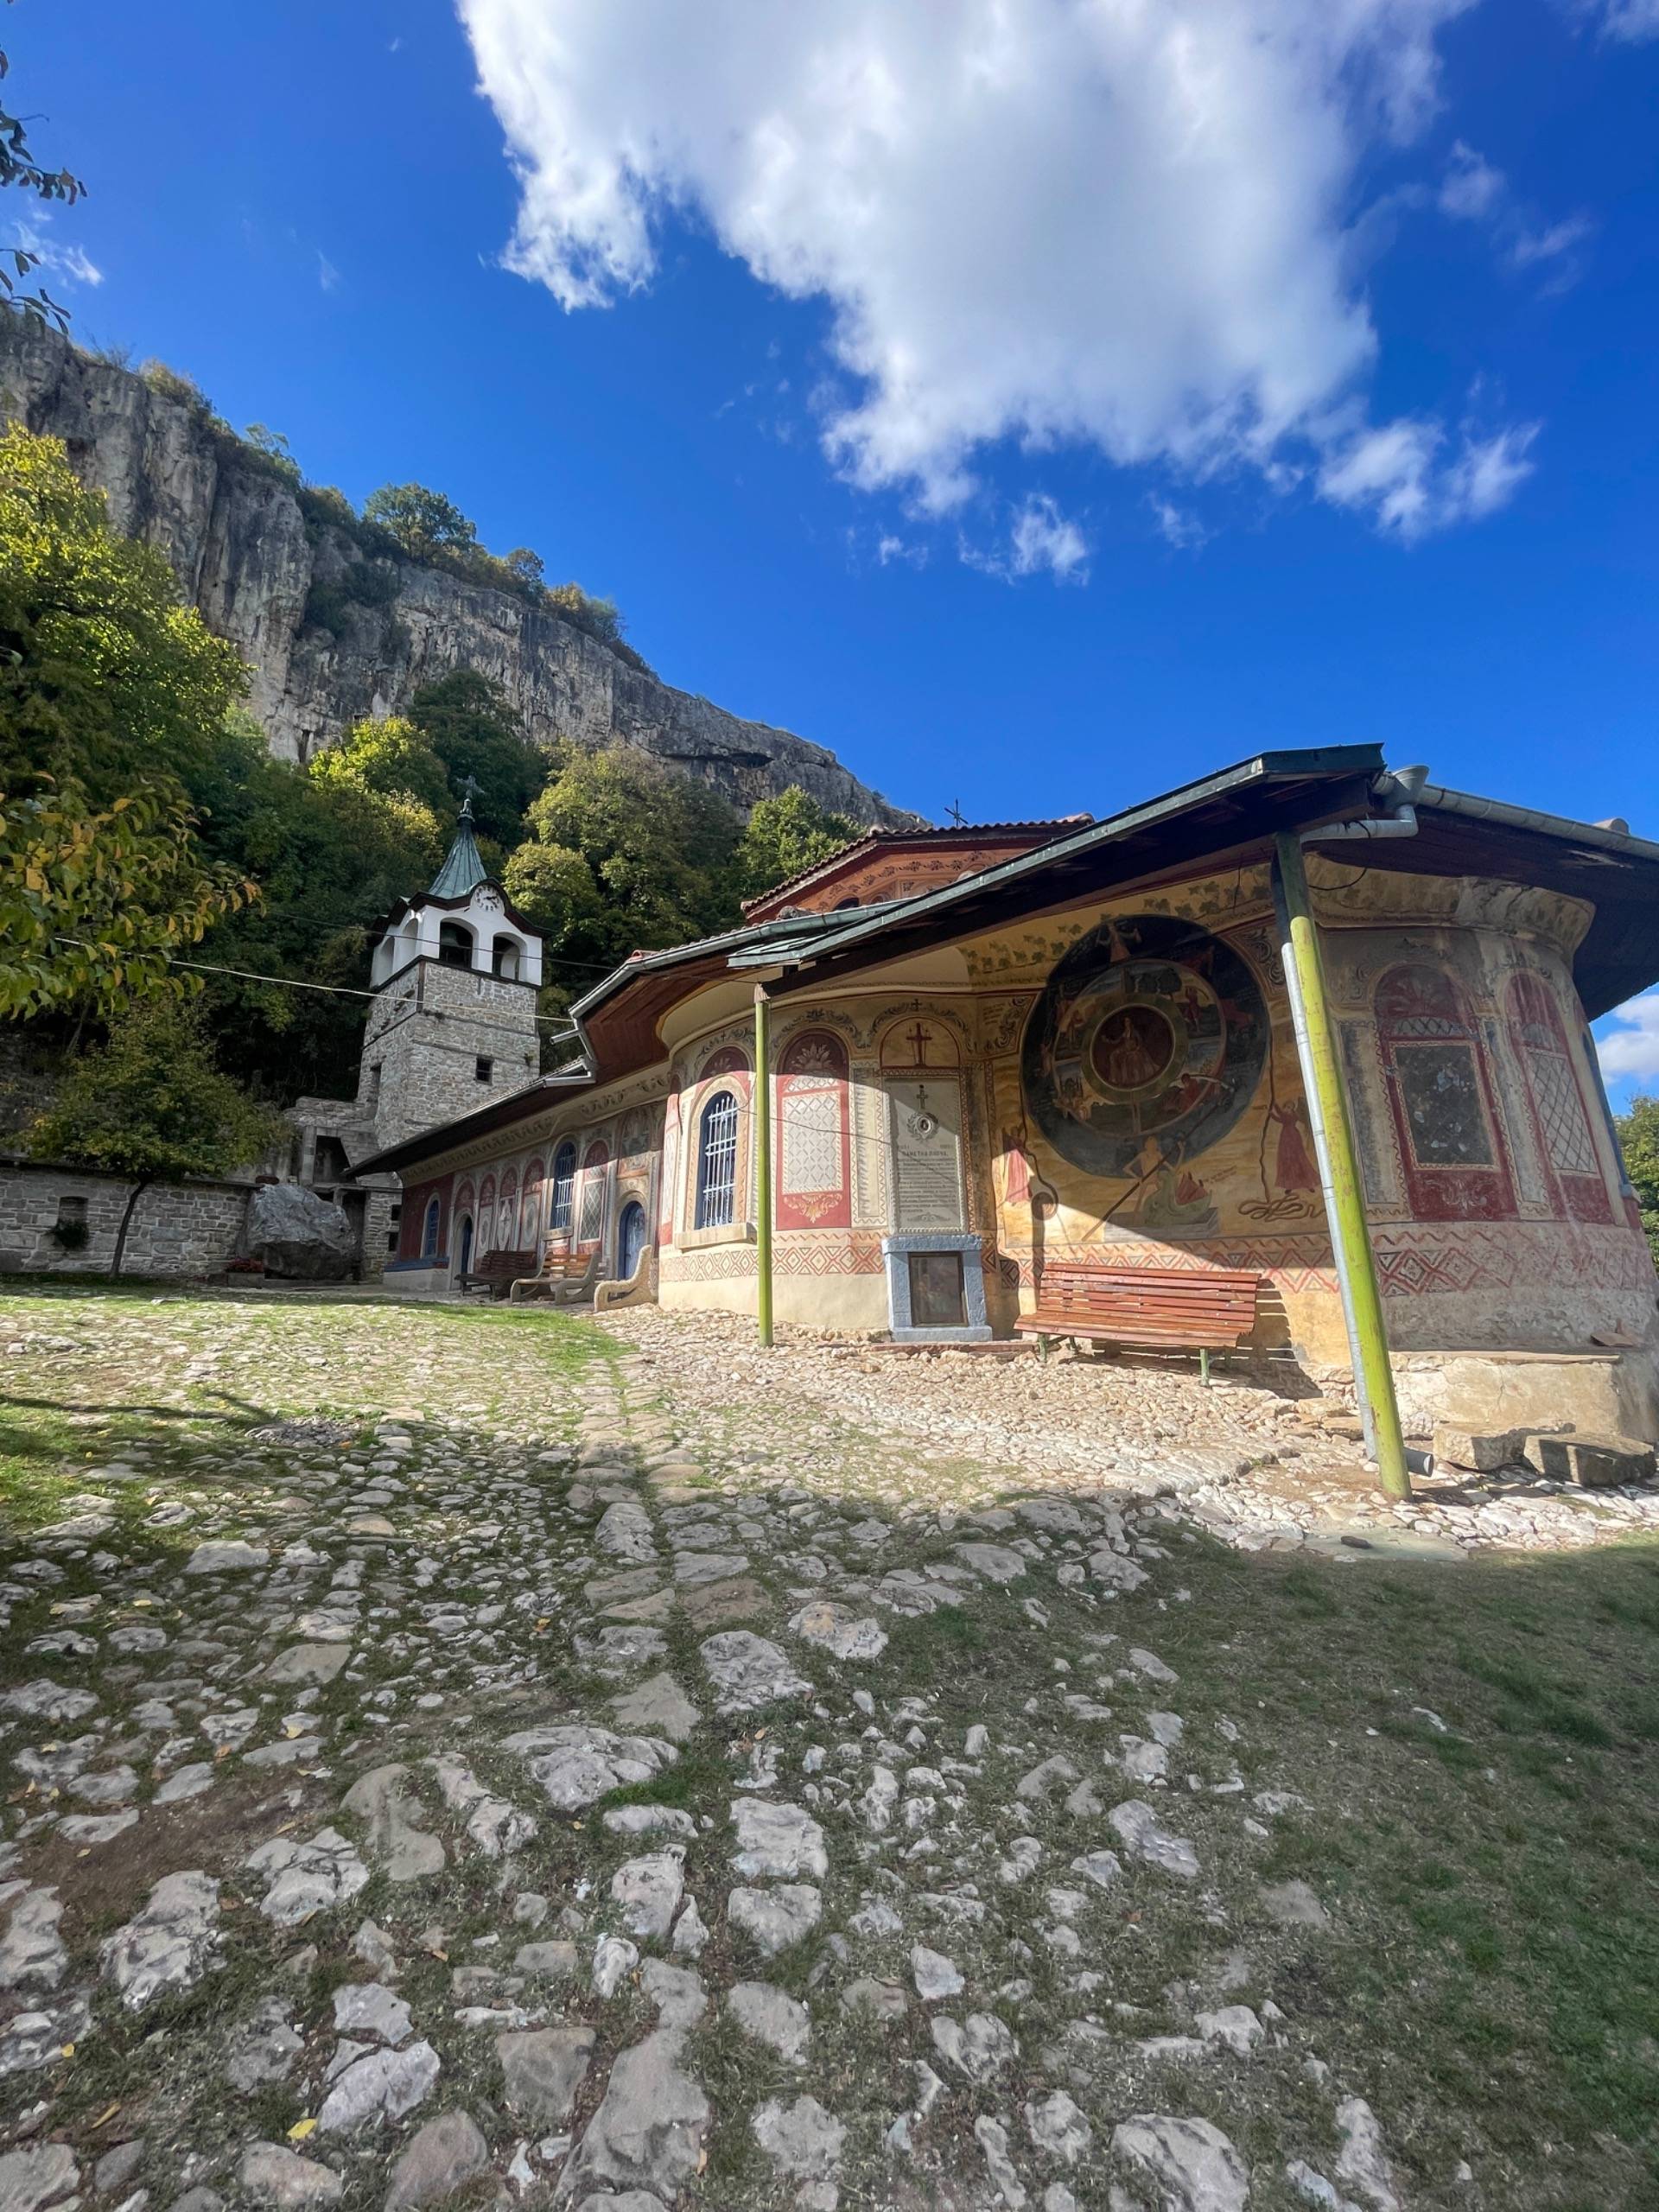 From Veliko Tarnovo to Preobrazhenski Monastery / Sunday walk with friends
